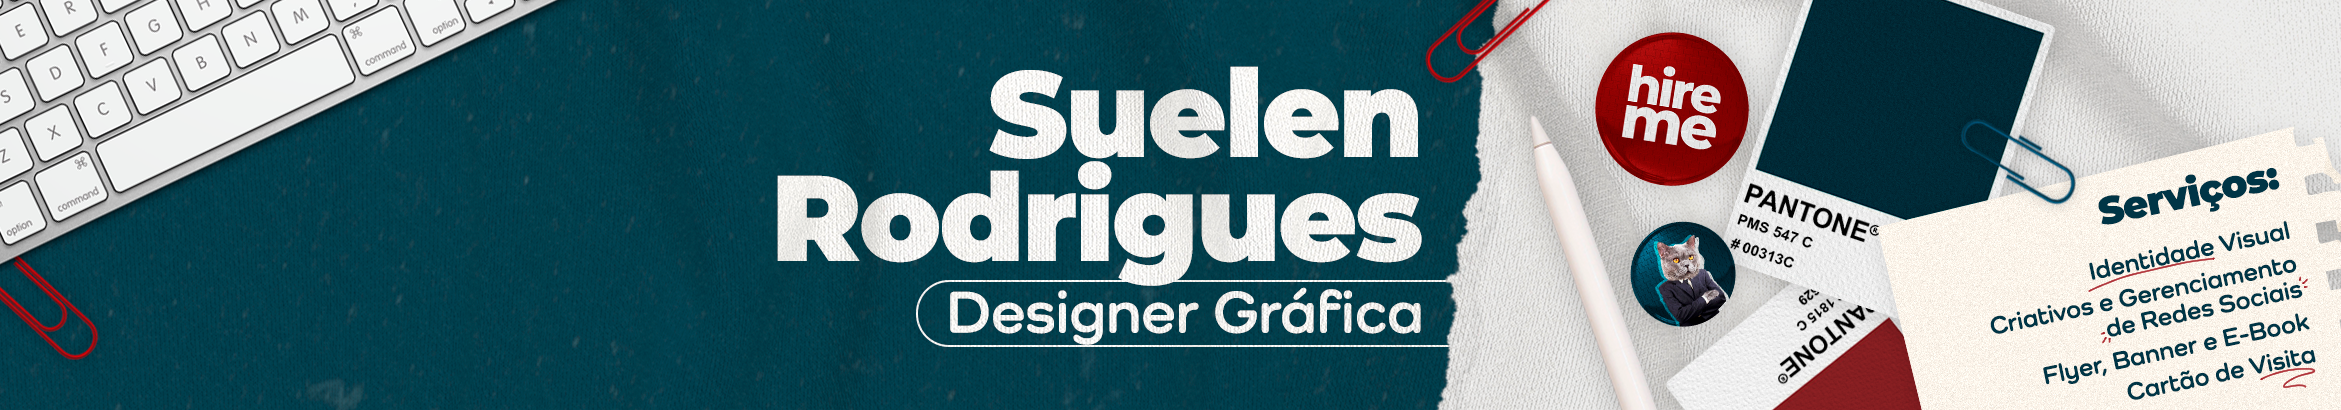 Suelen Rodrigues's profile banner